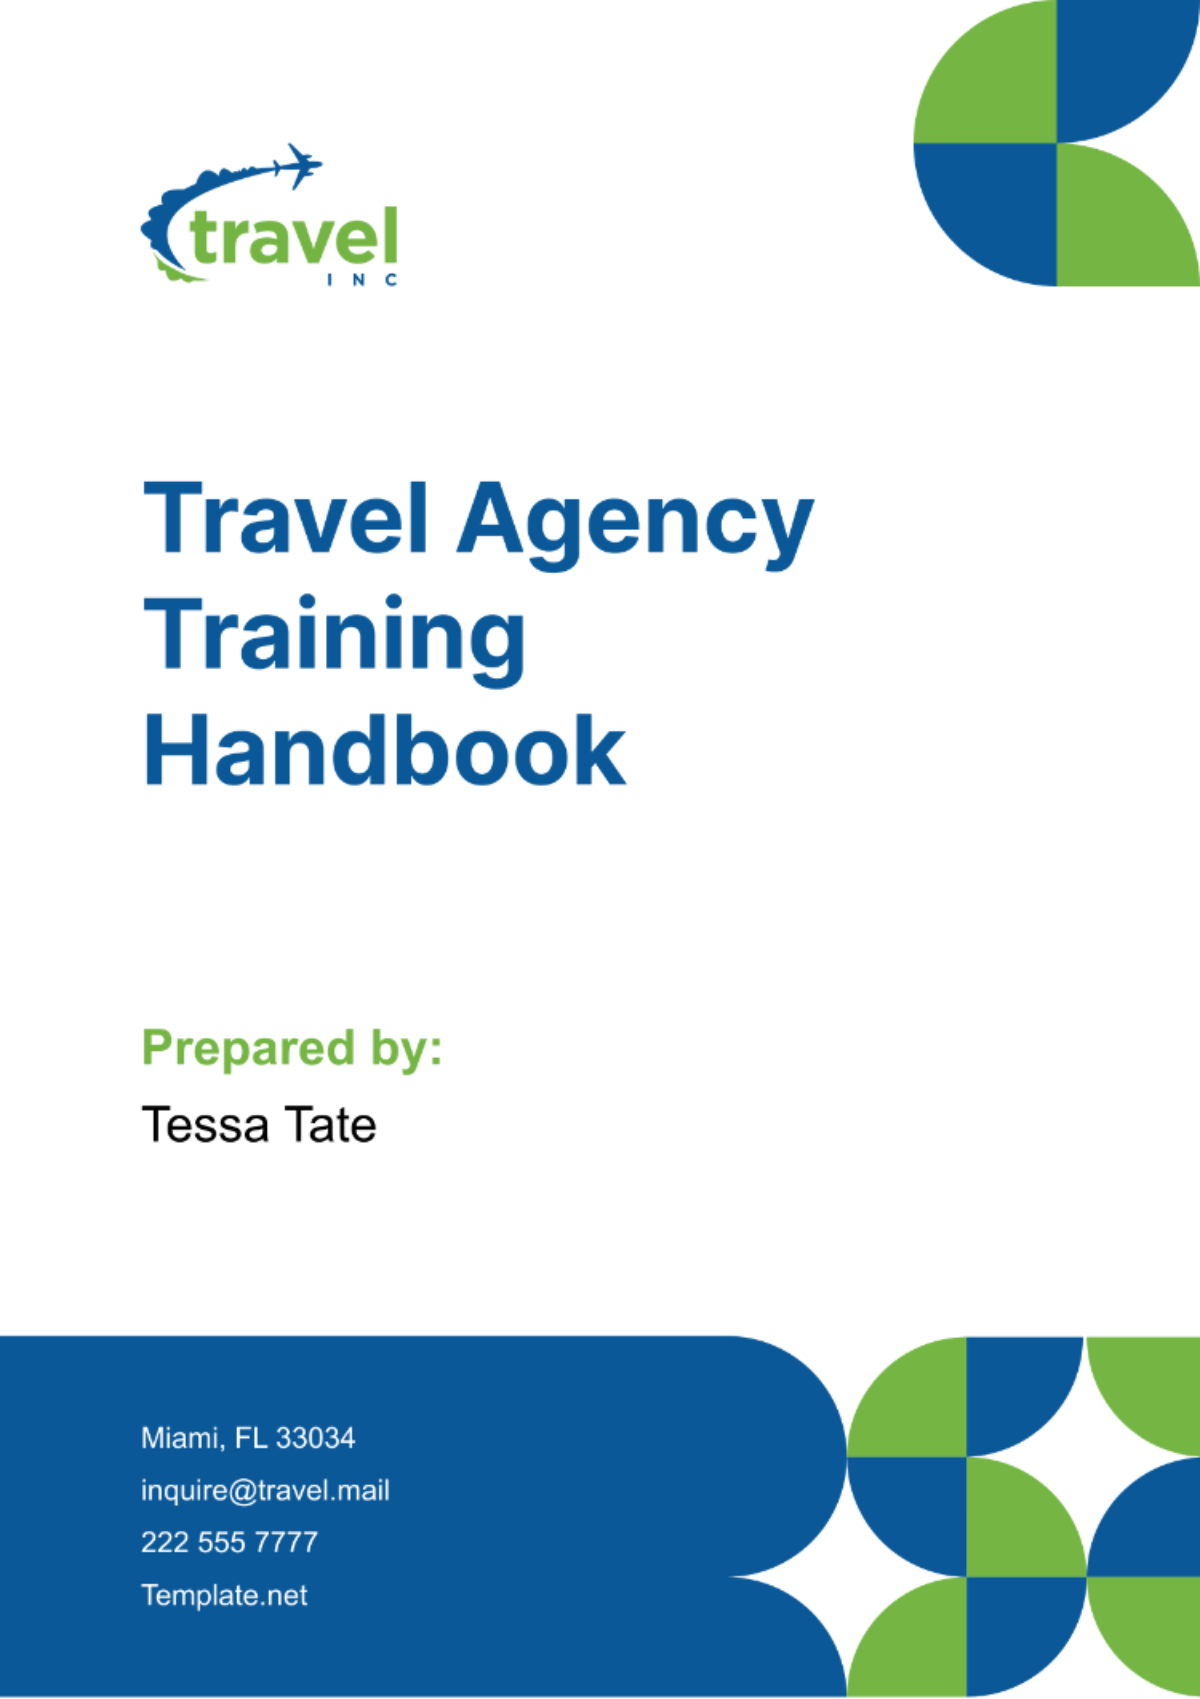 Travel Agency Training Handbook Template